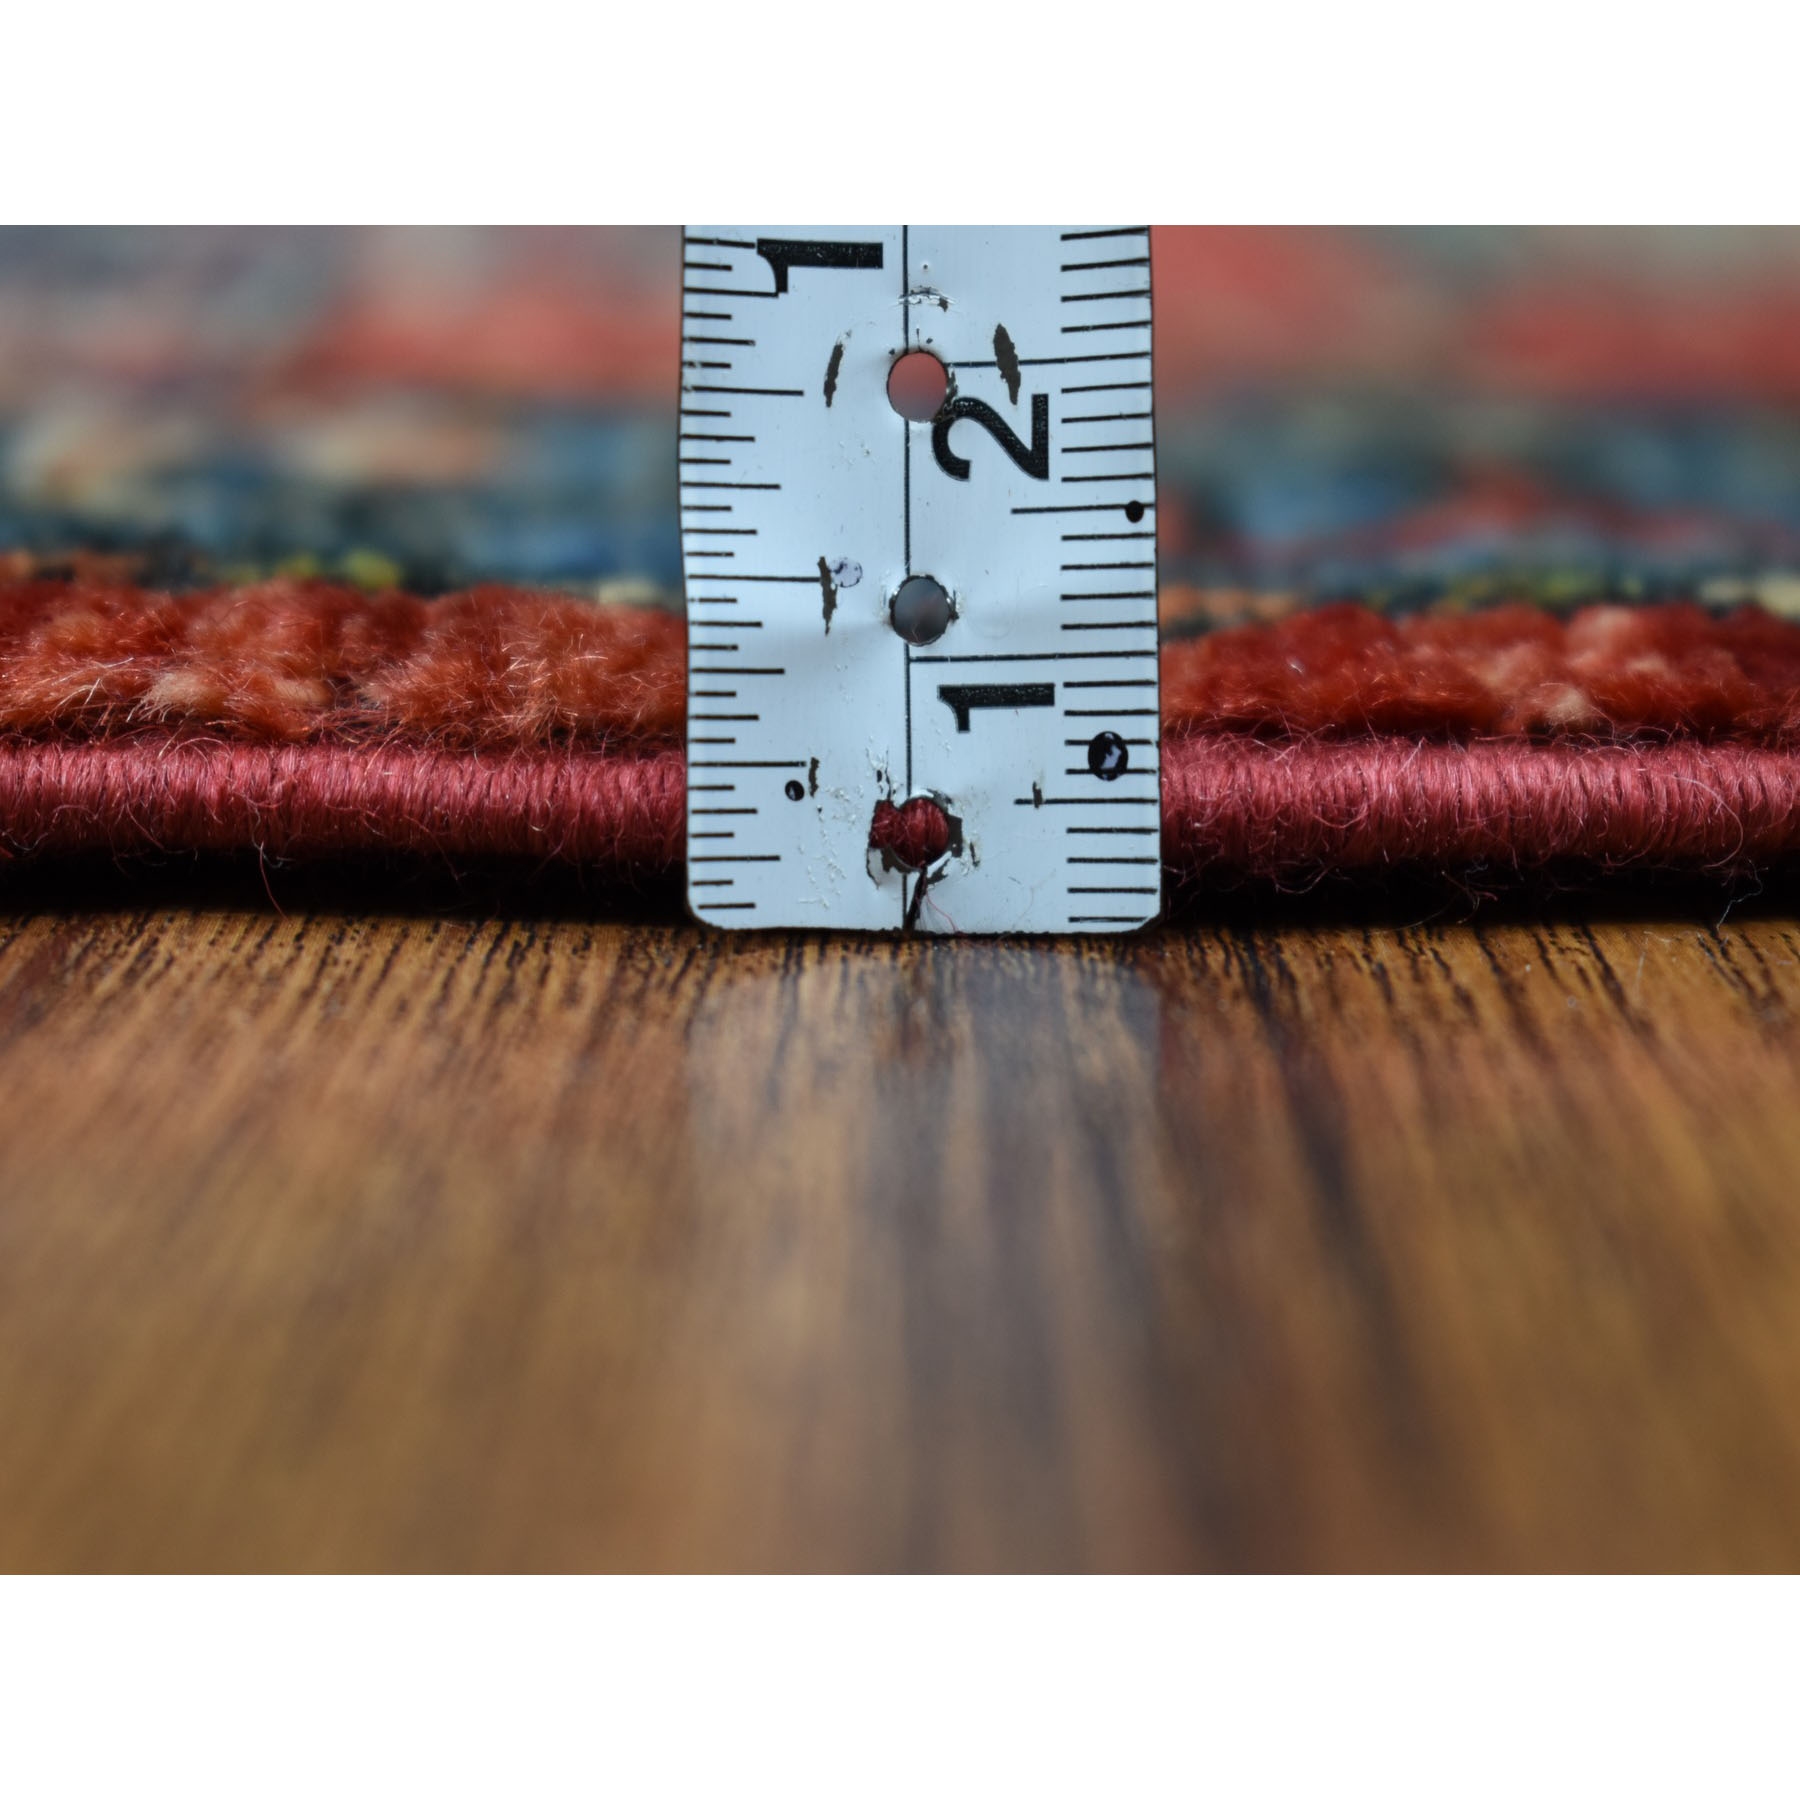 2-x3- Red Afghan Ersari Geometric Design Pure Wool Hand Knotted Oriental Rug 